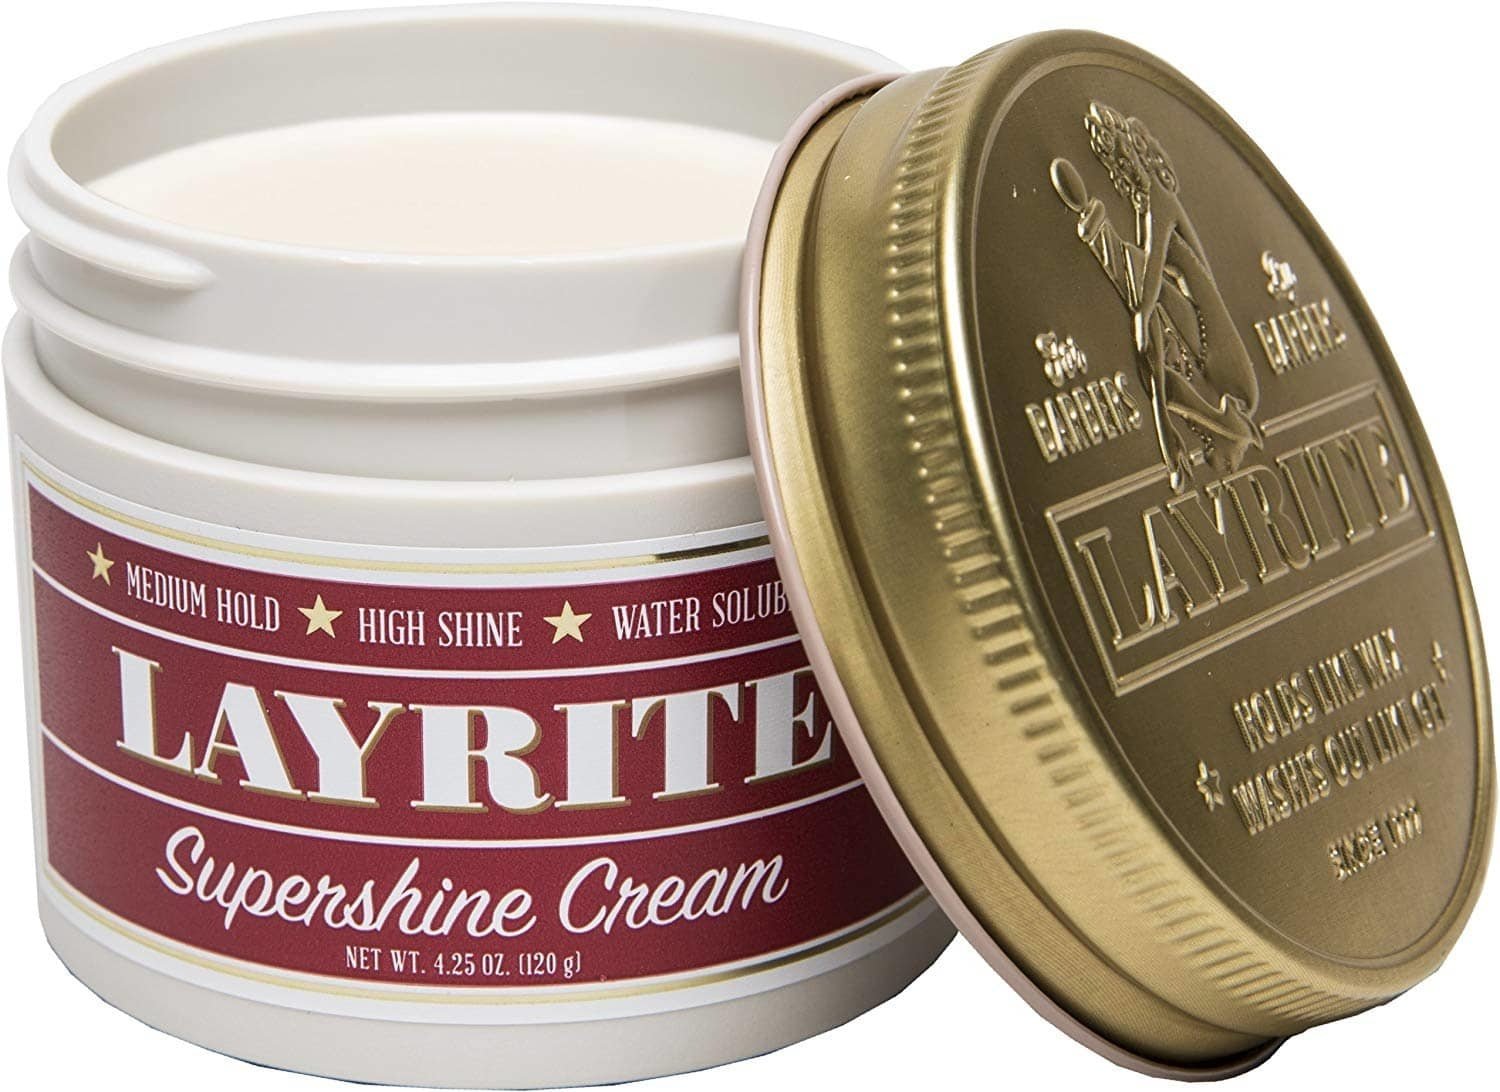 Super Shine Cream - Layrite - 120g - Baard en Co - Pommade -